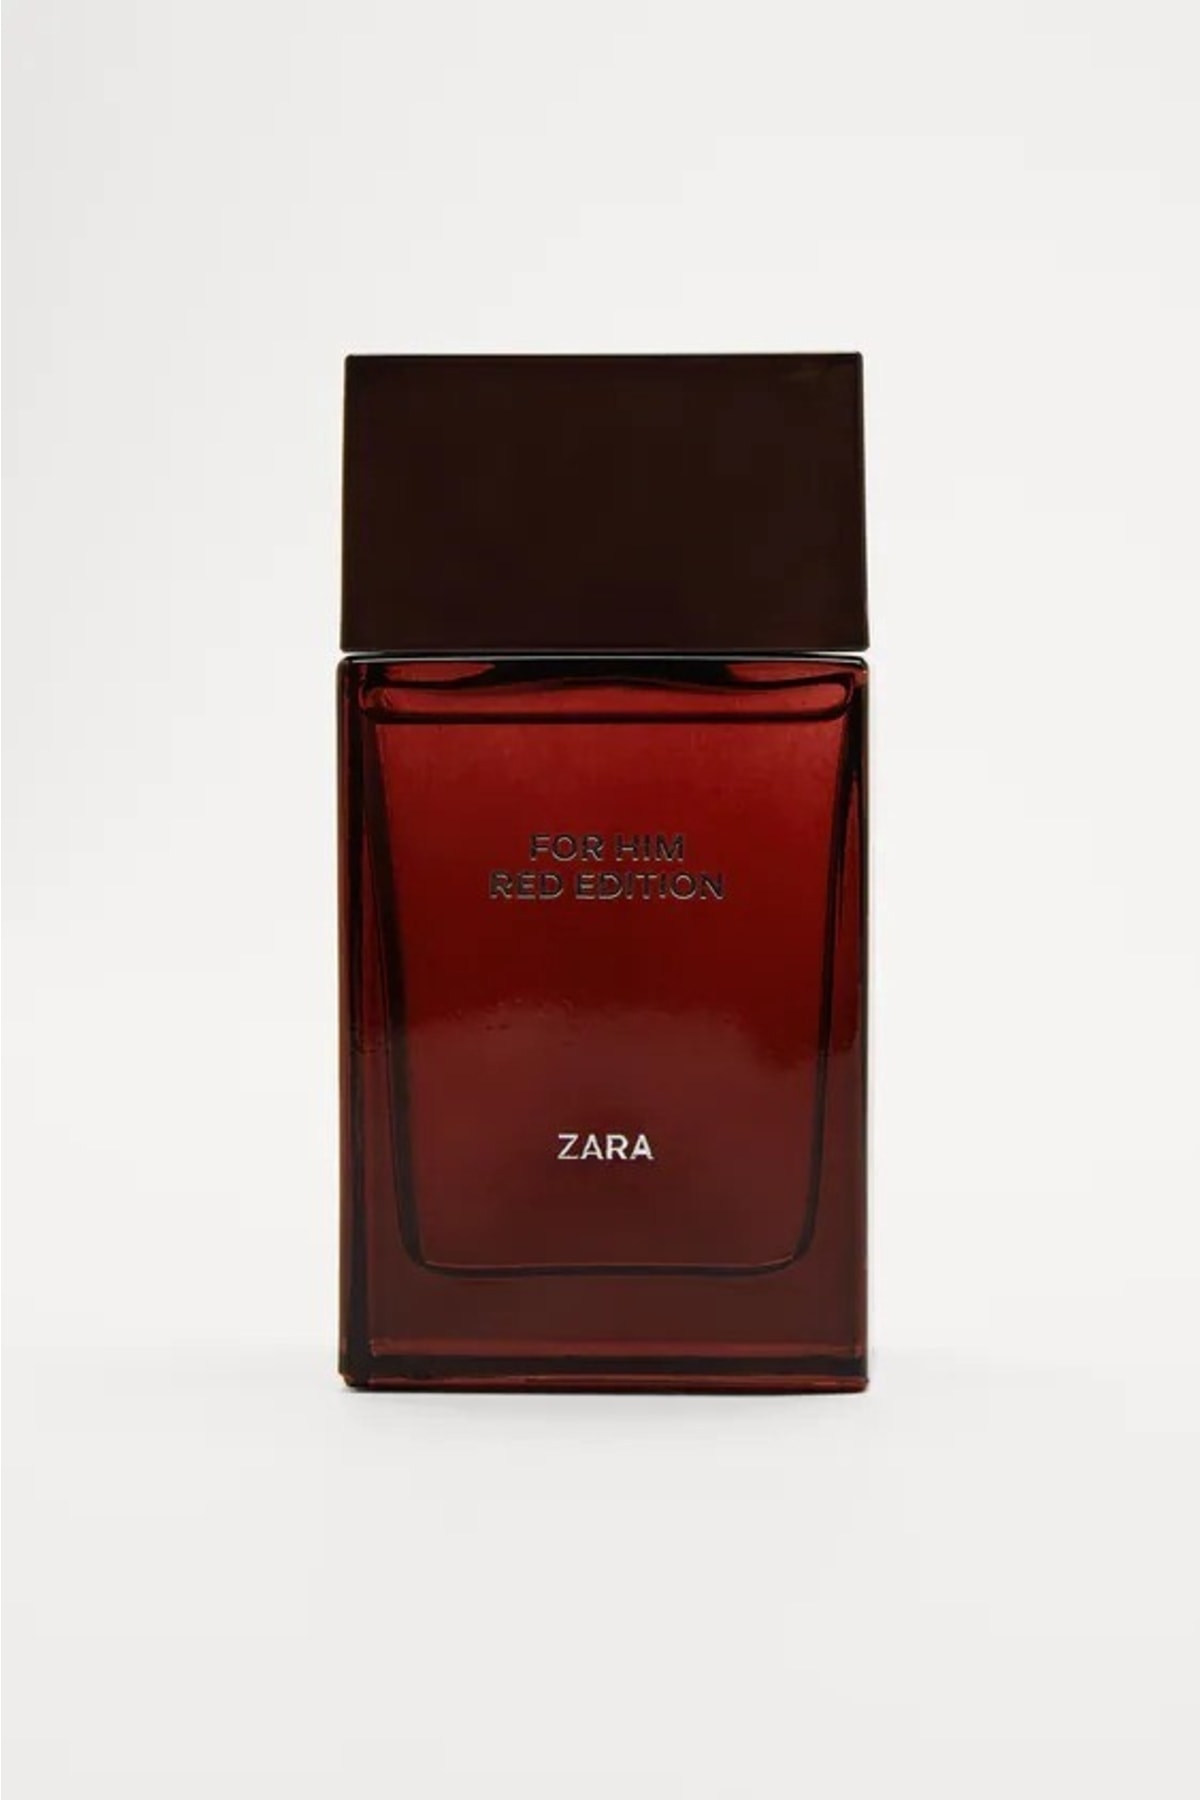 Zara For Hım Red Edıtıon Eau De Toılette 100 Ml (3,38 Fl. Oz). Erkek Parfüm